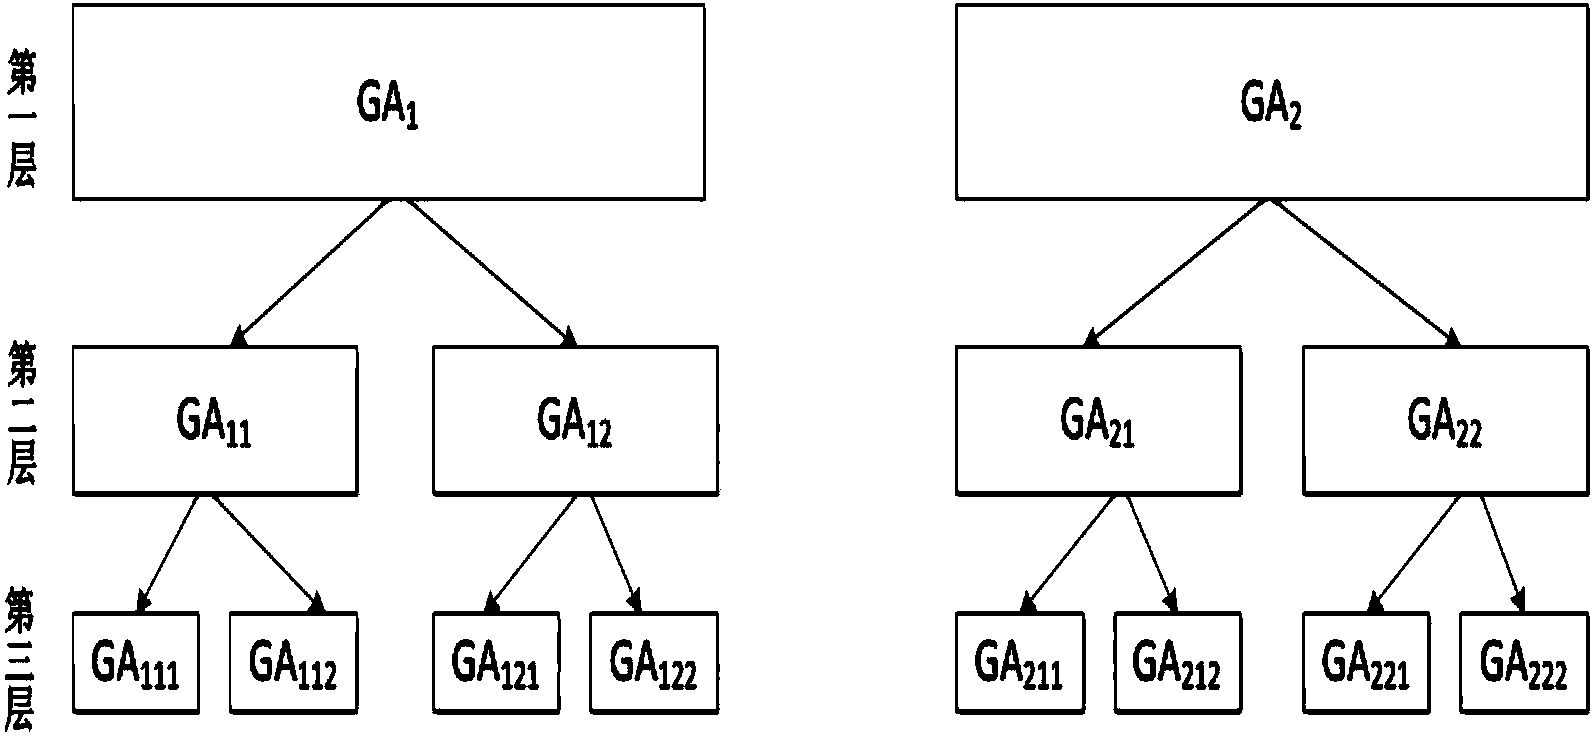 Test case generation method based on hierarchic genetic algorithm